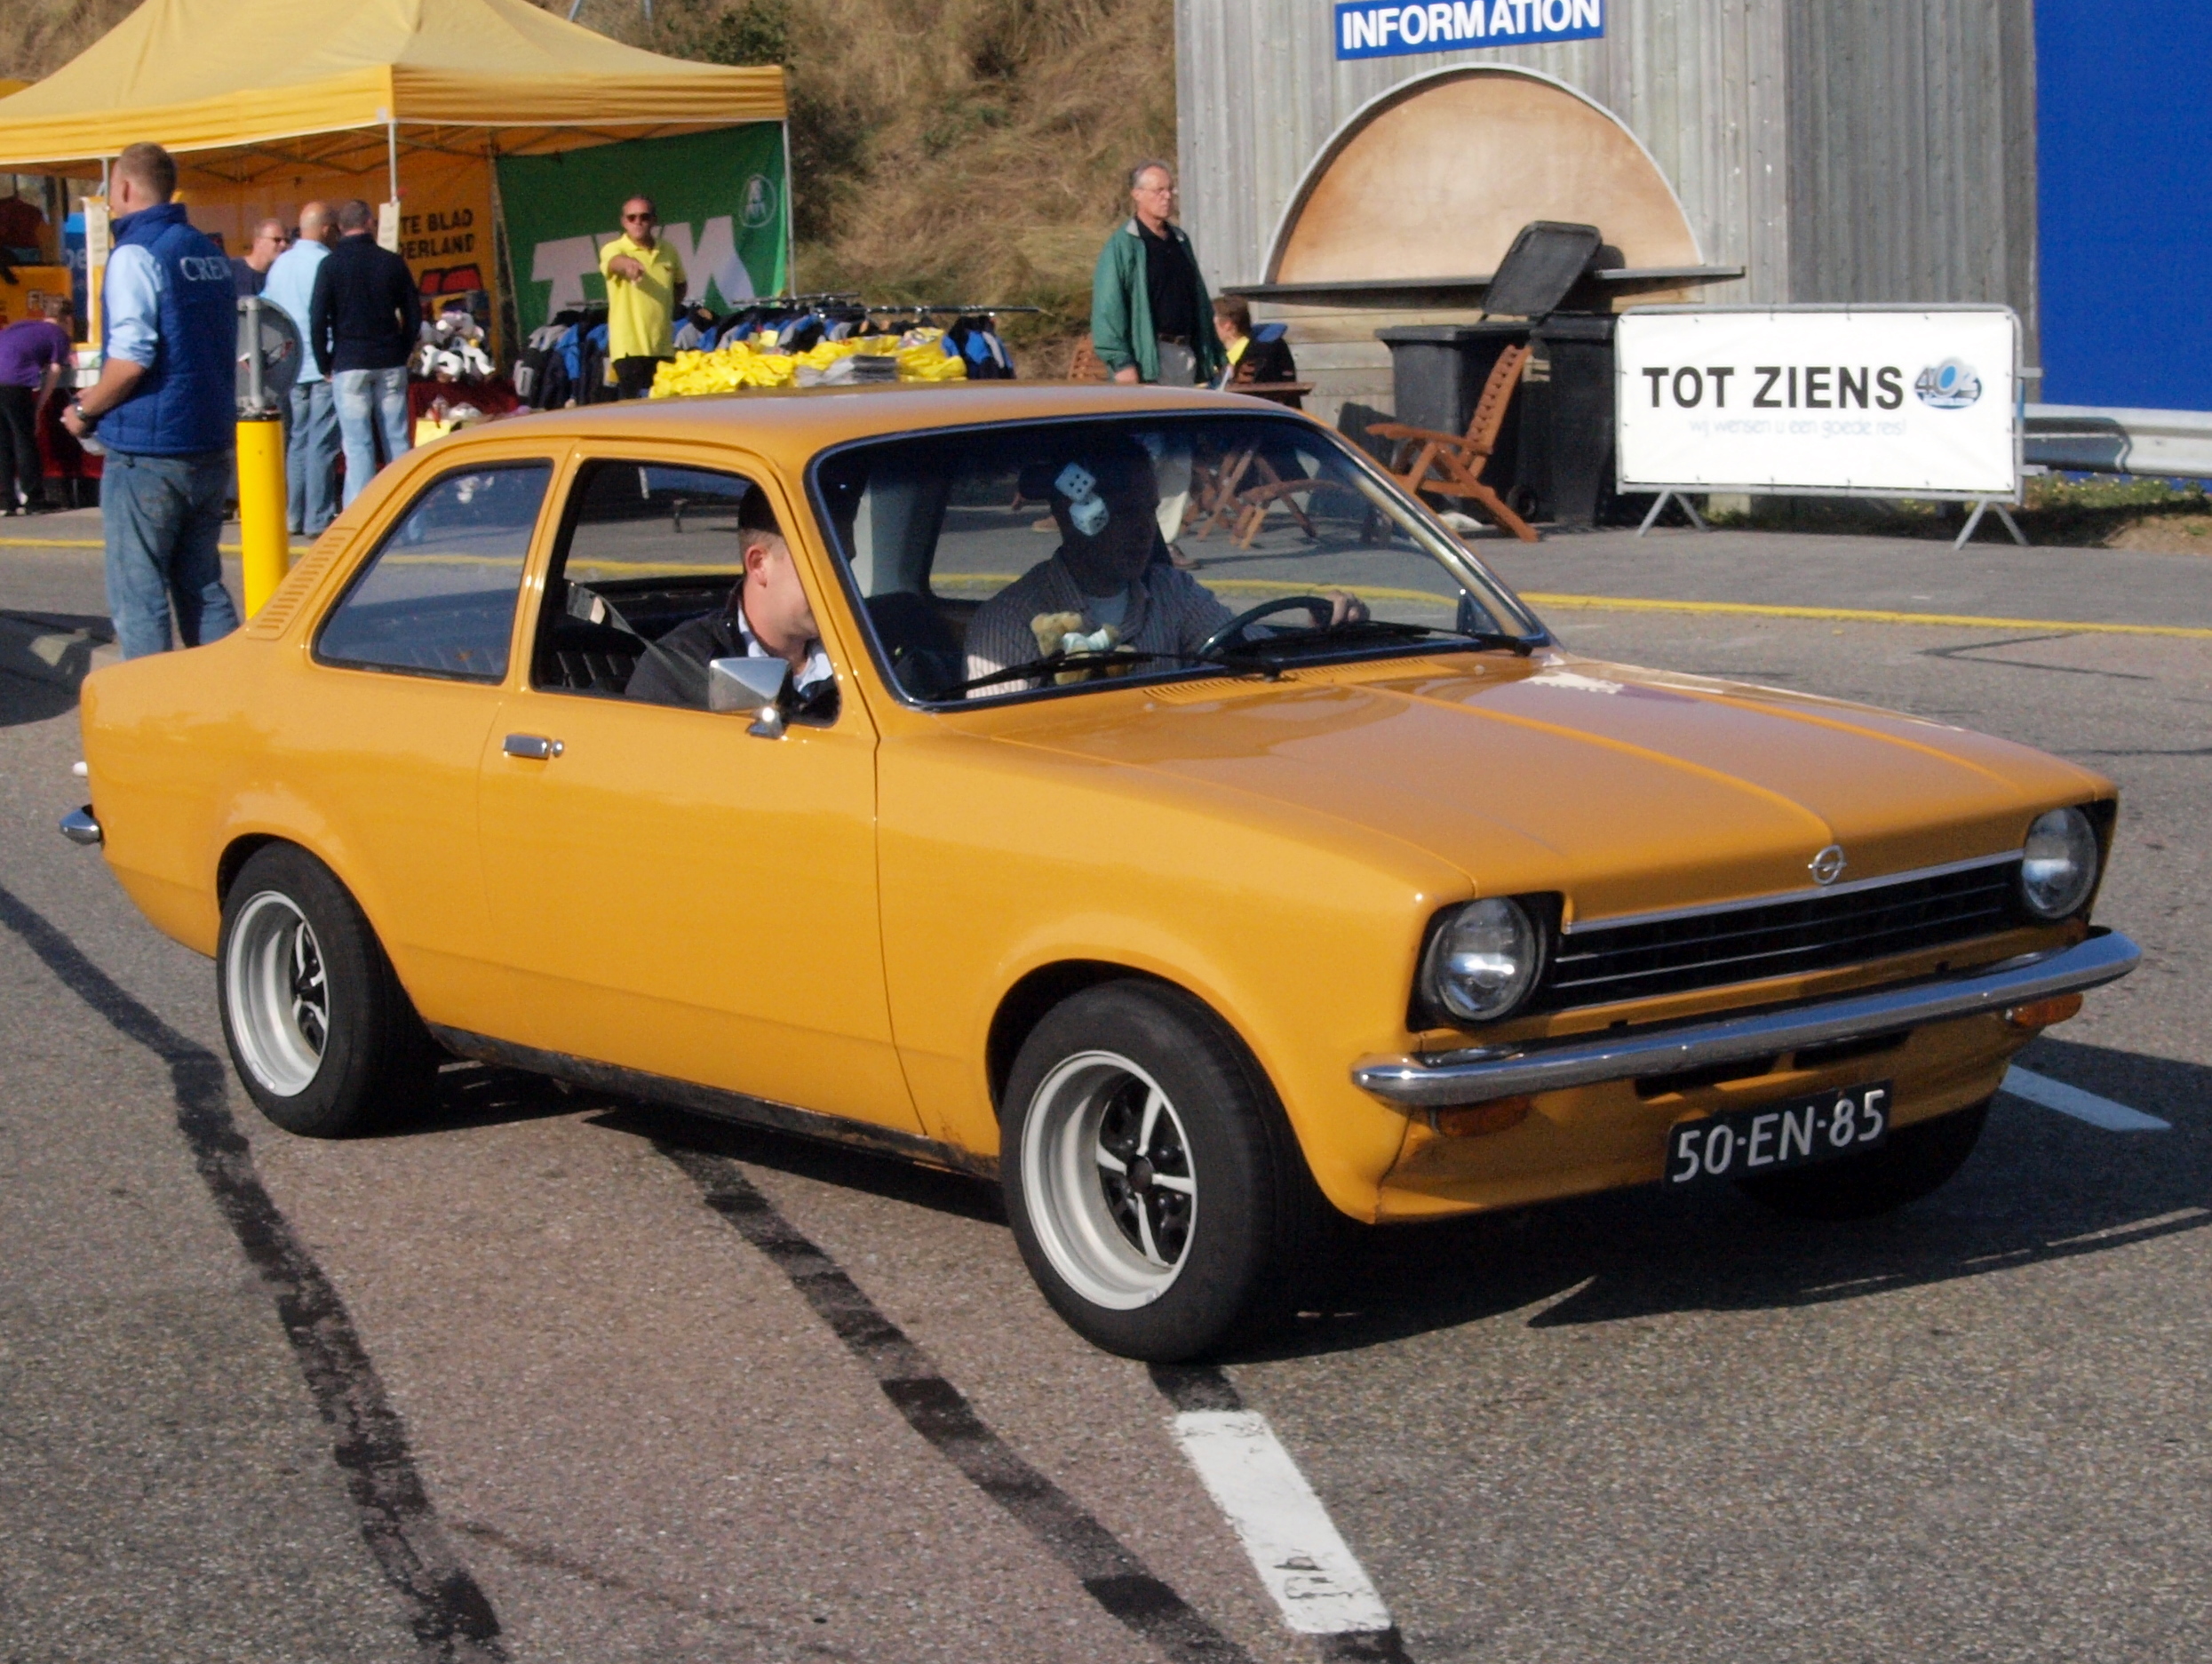 Dossier: Immatriculation néerlandaise AUTOMATIQUE Opel KADETT 50-EN-85 pic3.JPG